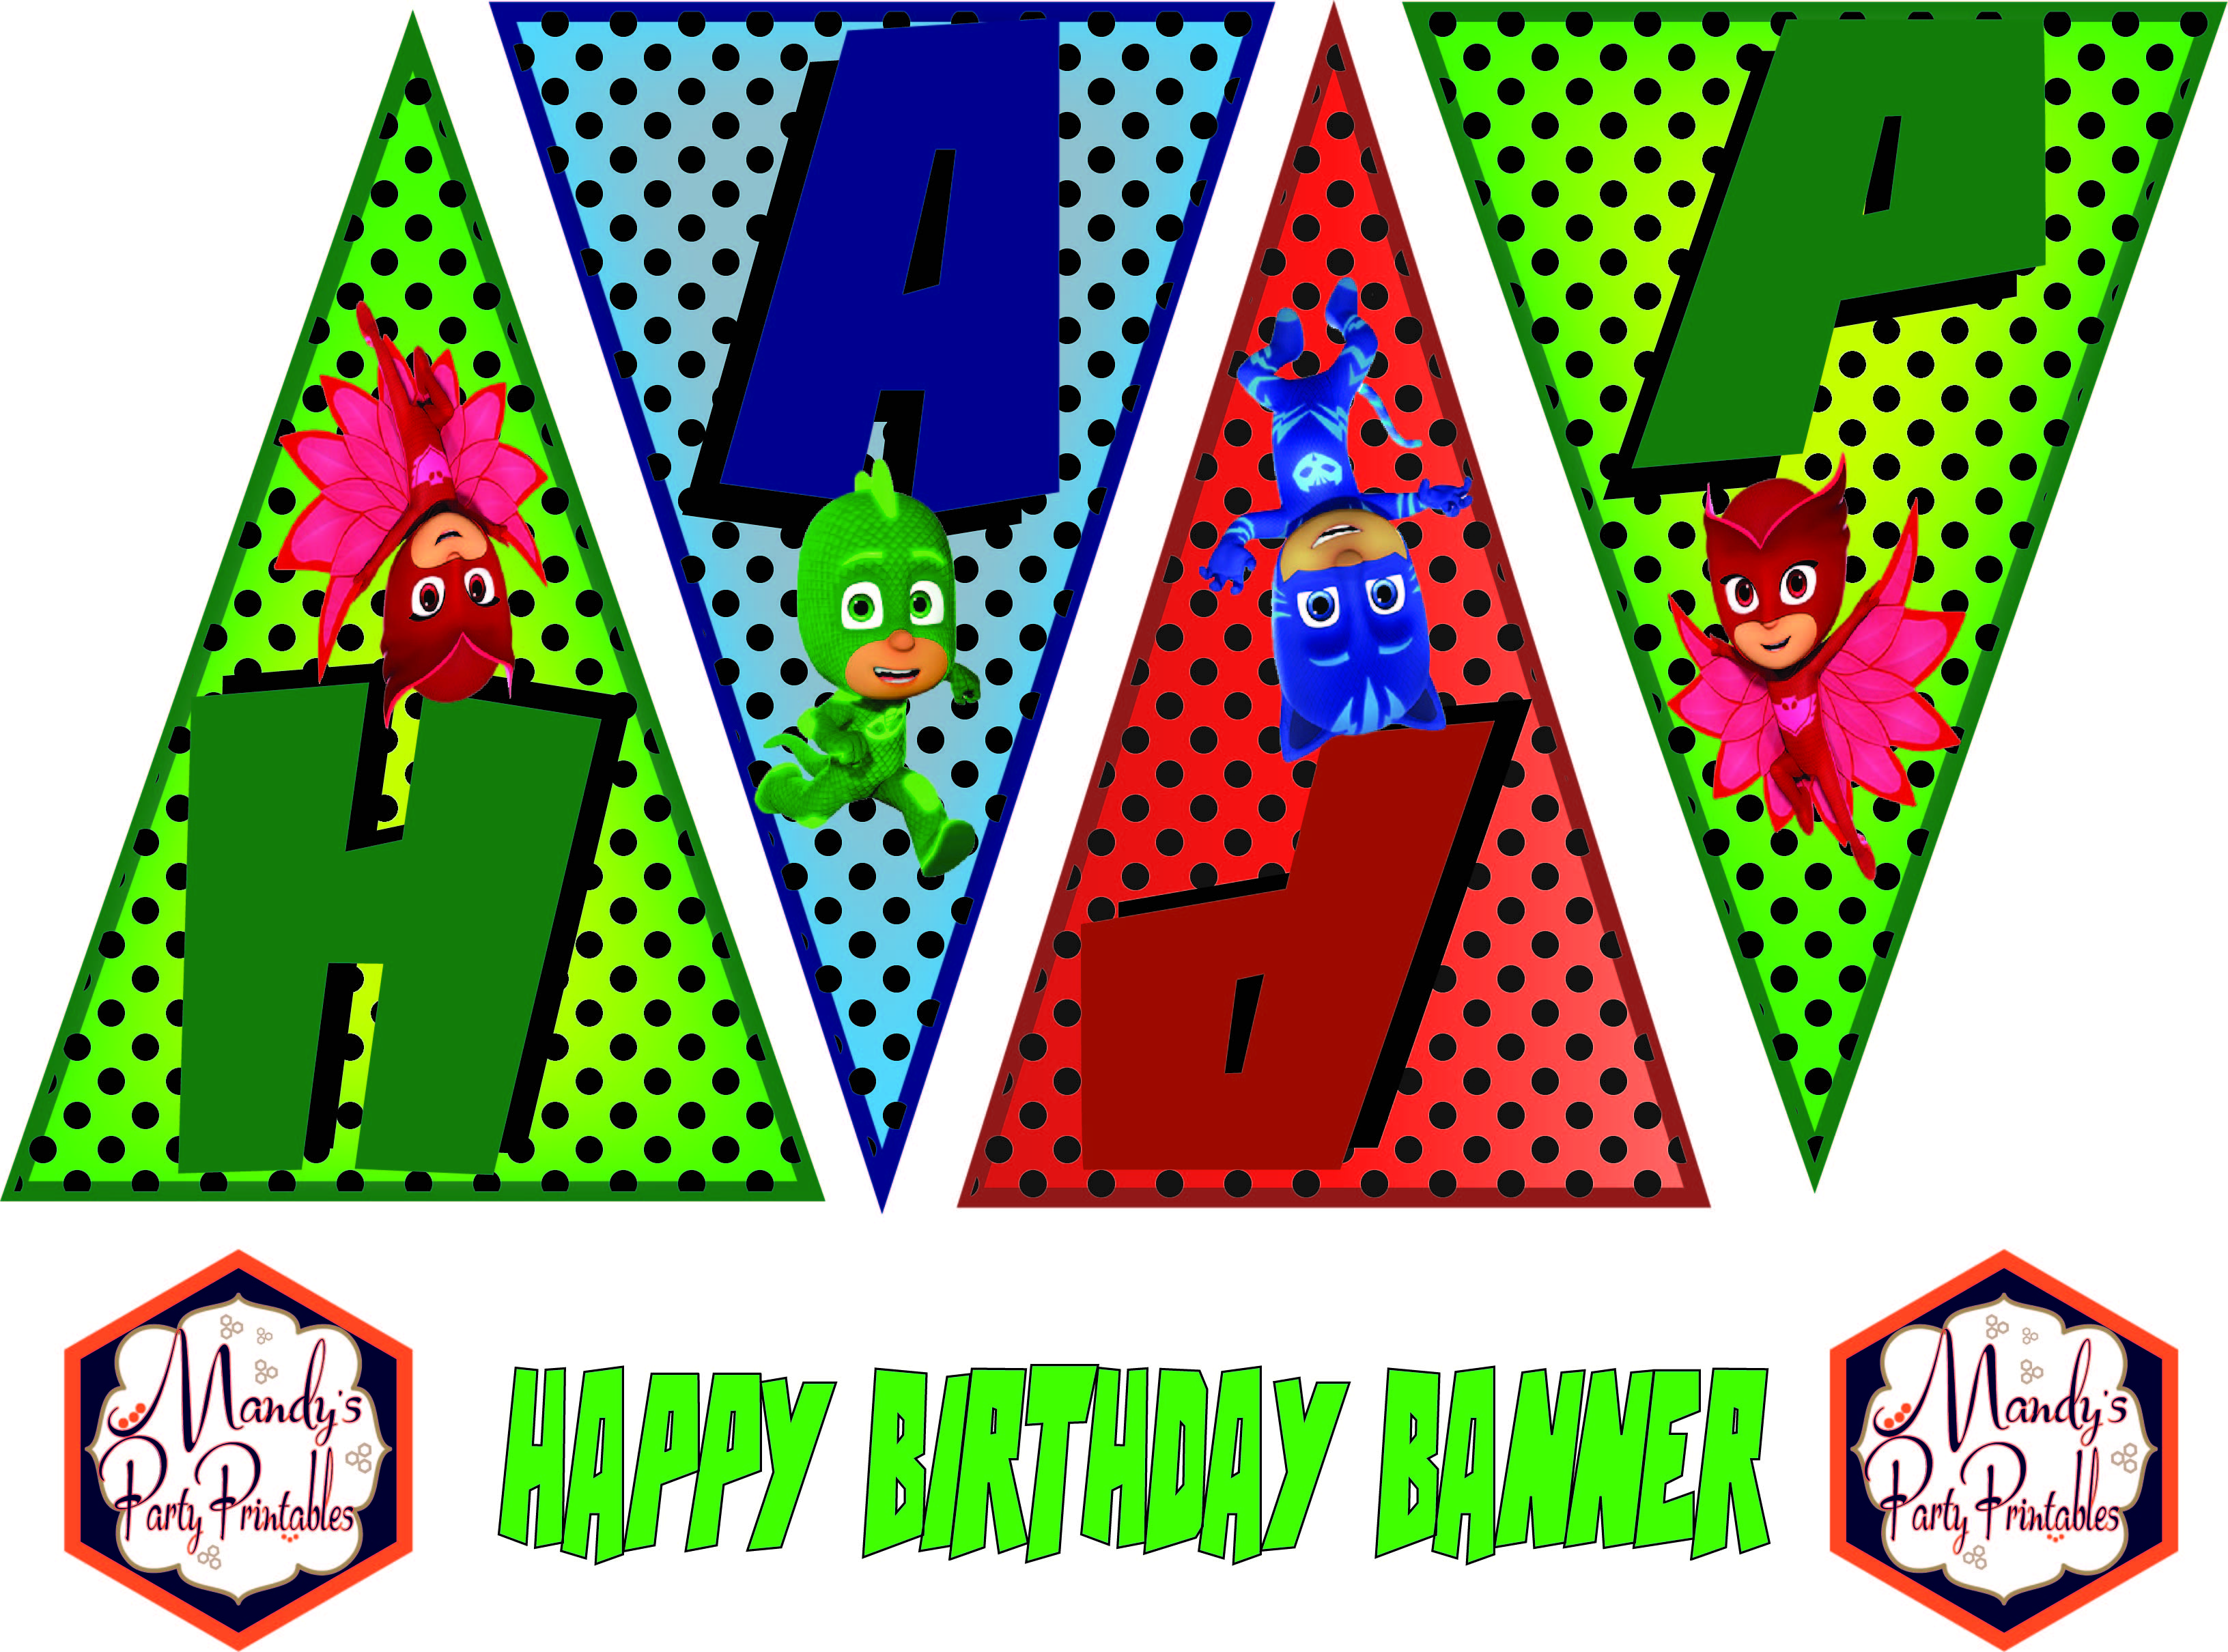 Happy Birthday Banner from Free PJ Masks Birthday Party Printables via Mandy's Party Printables